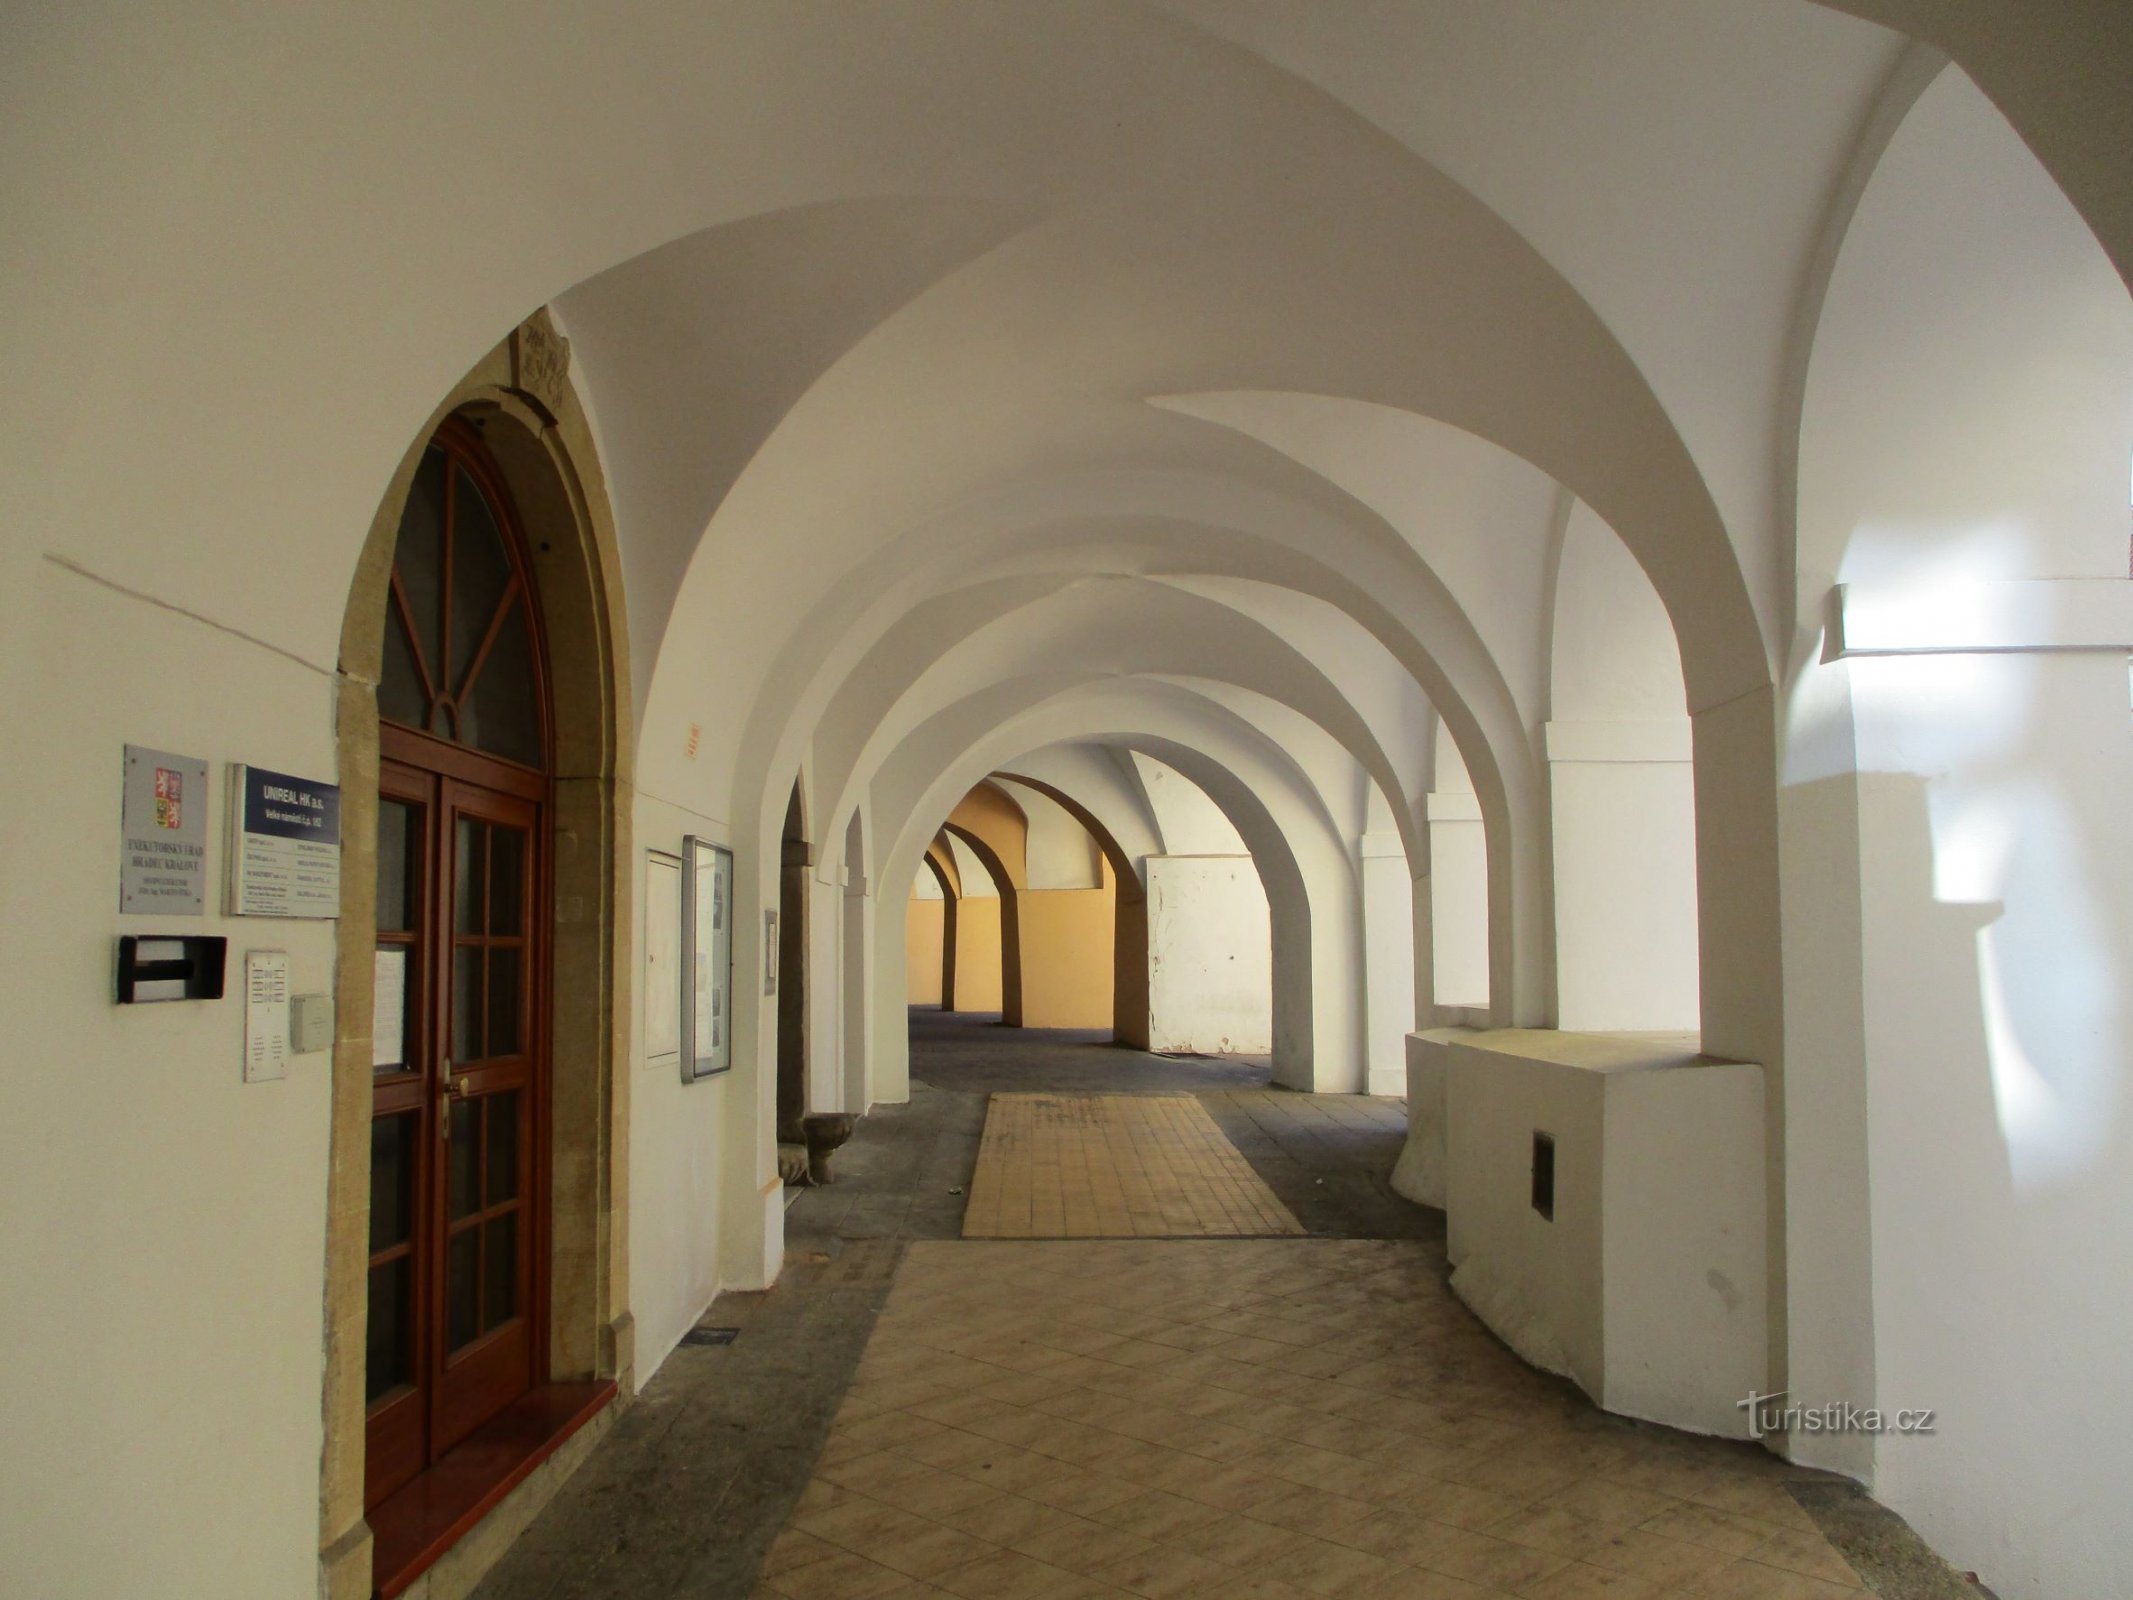 Velika dvorana iz št. 162 (Hradec Králové, 25.4.2020. XNUMX. XNUMX)